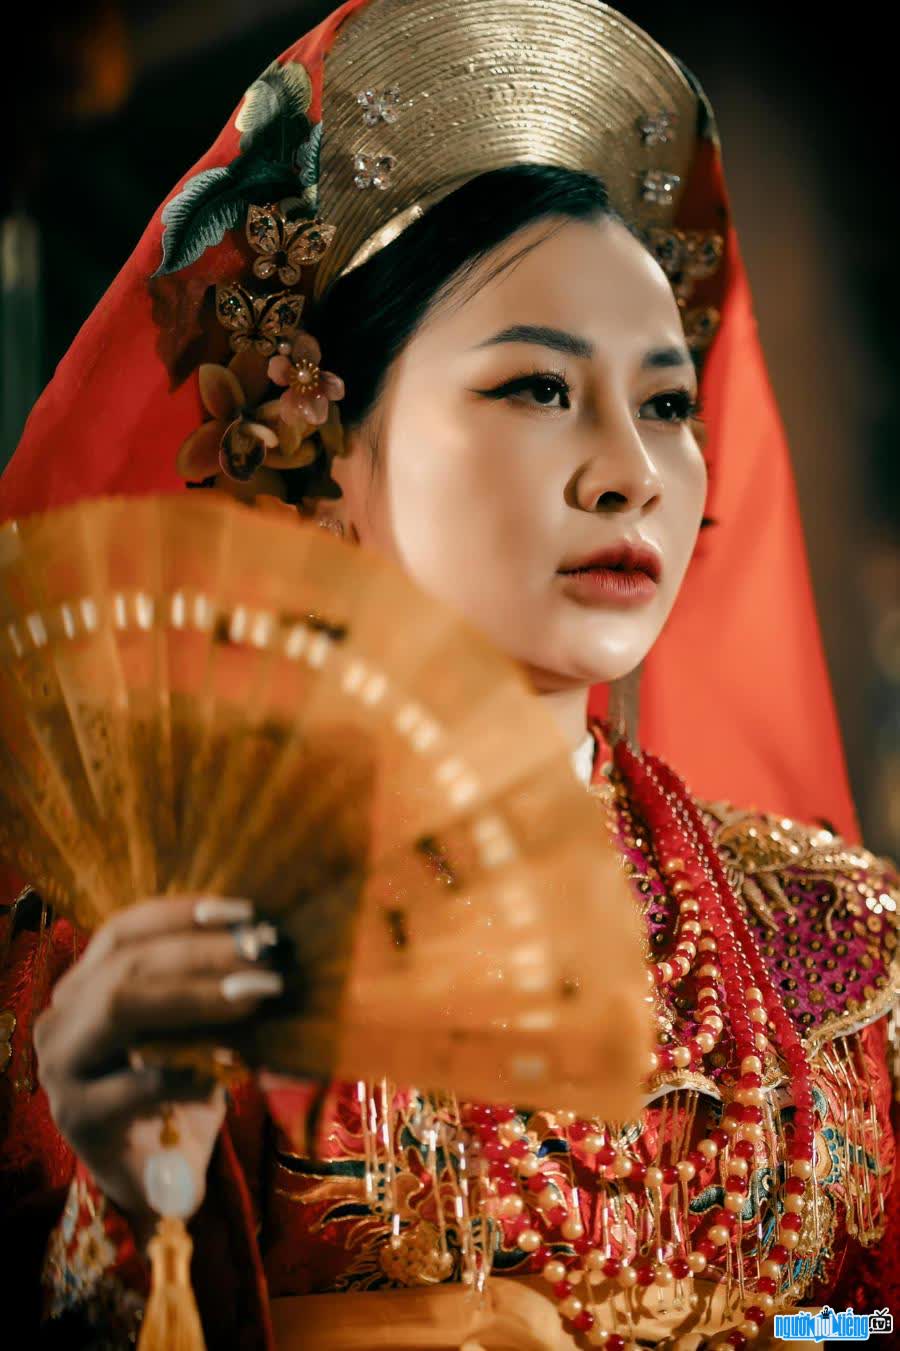 the dongsaeng Nguyen Hoang Dieu Ngan owns a beautiful appearance